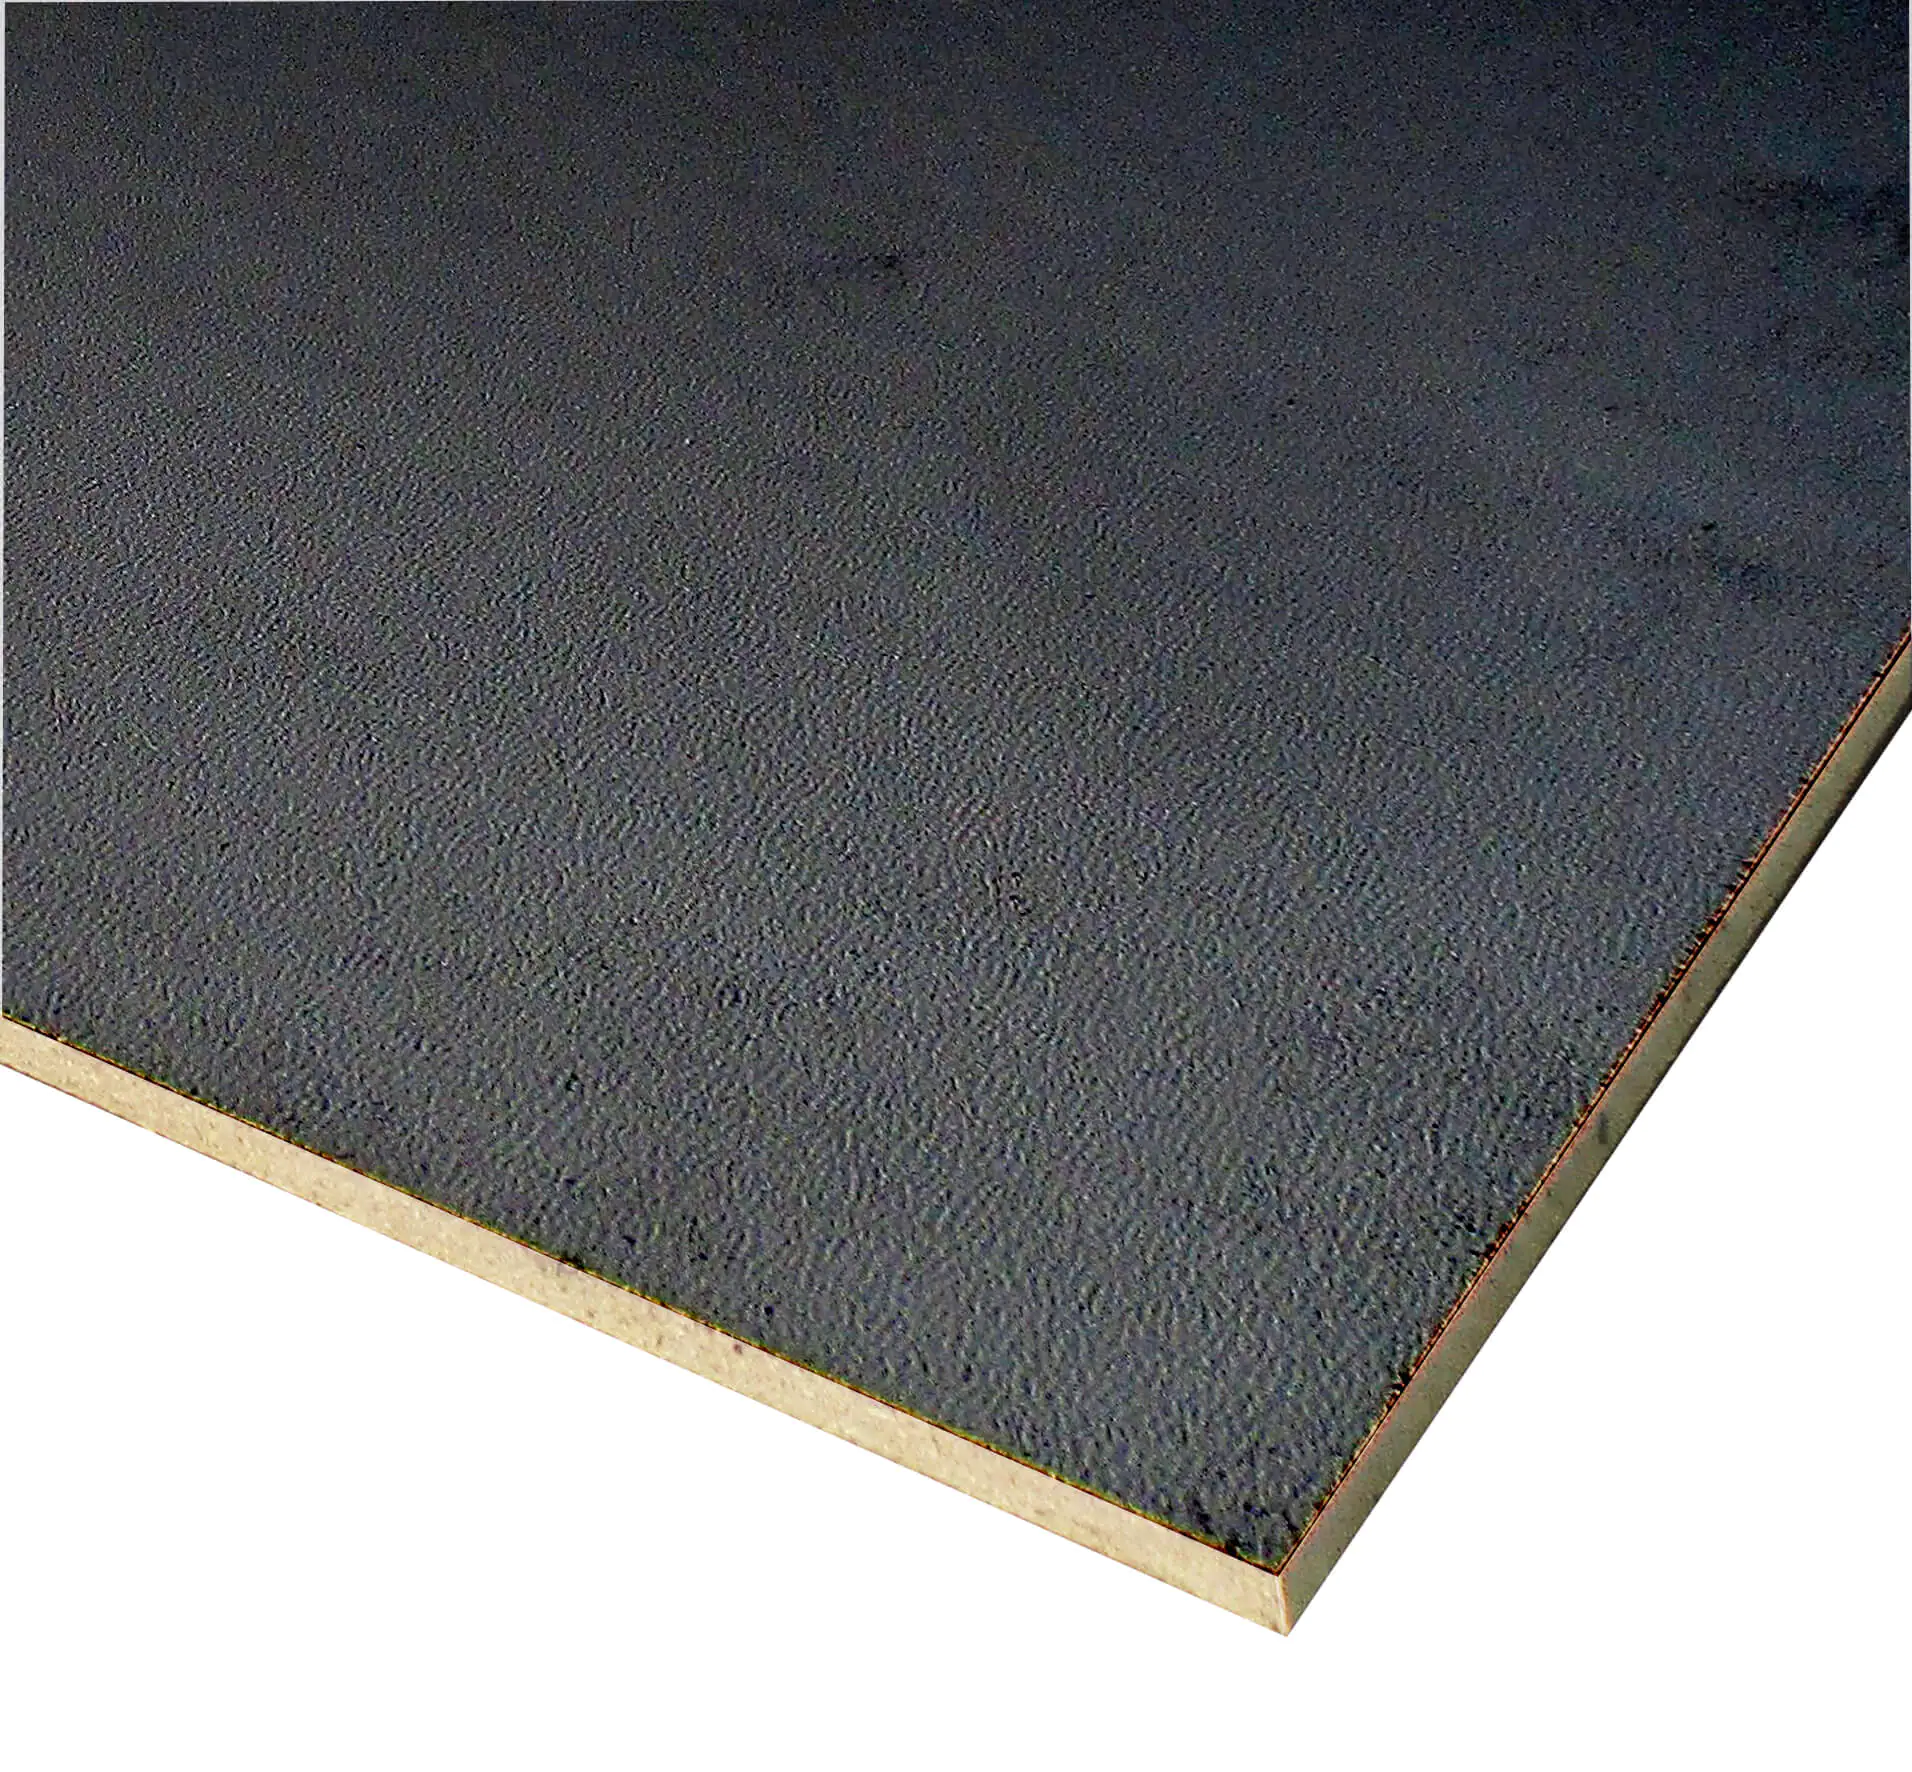 Platte schwarz 30x19 cm – MÄVO